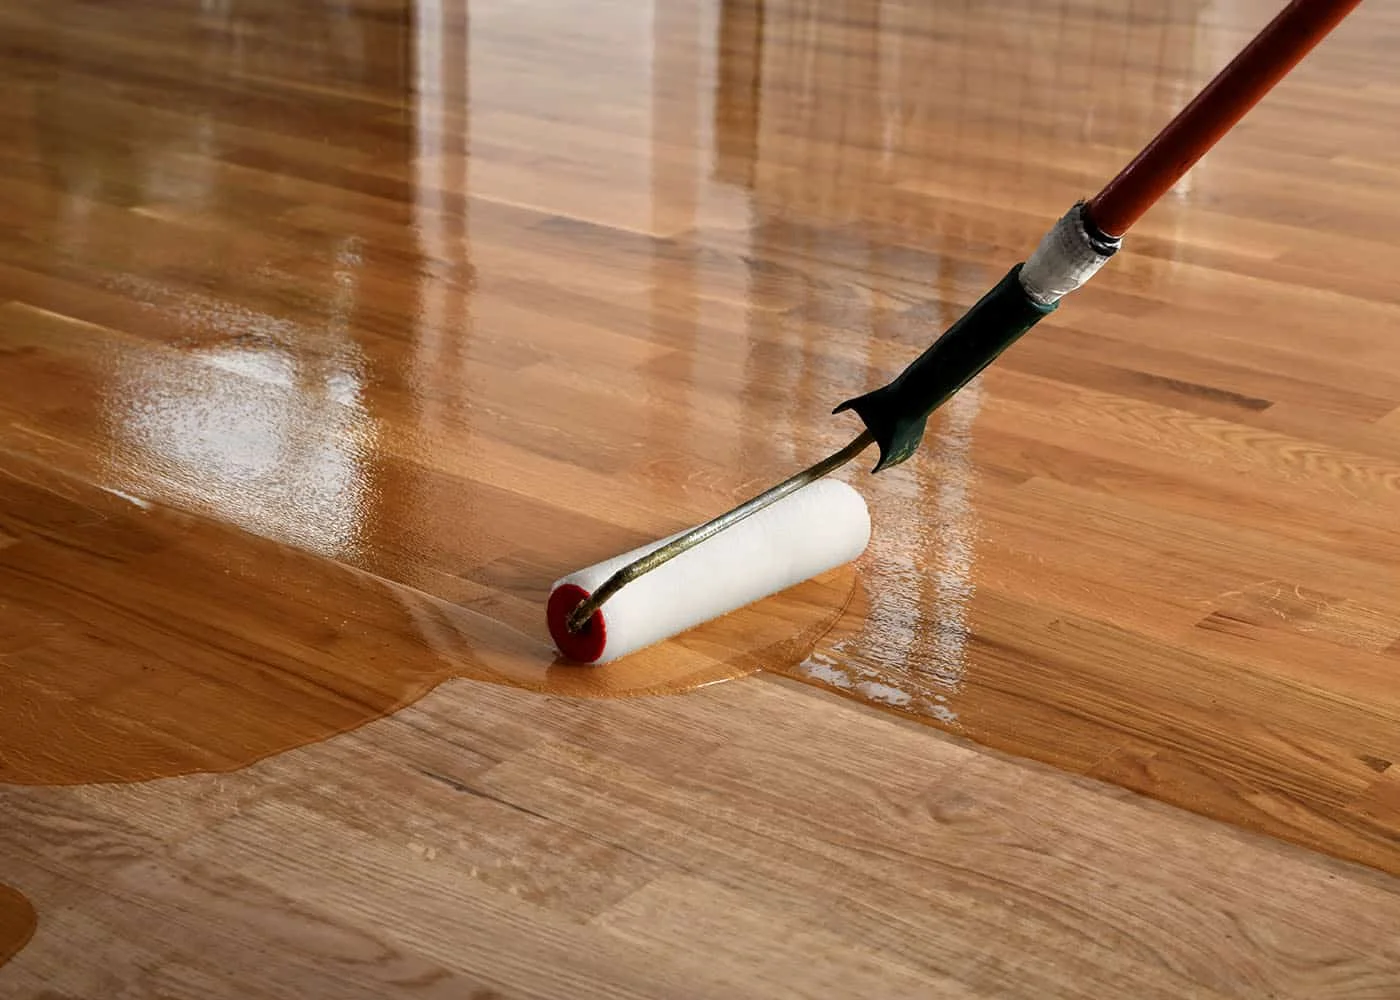 parquet floor polishing